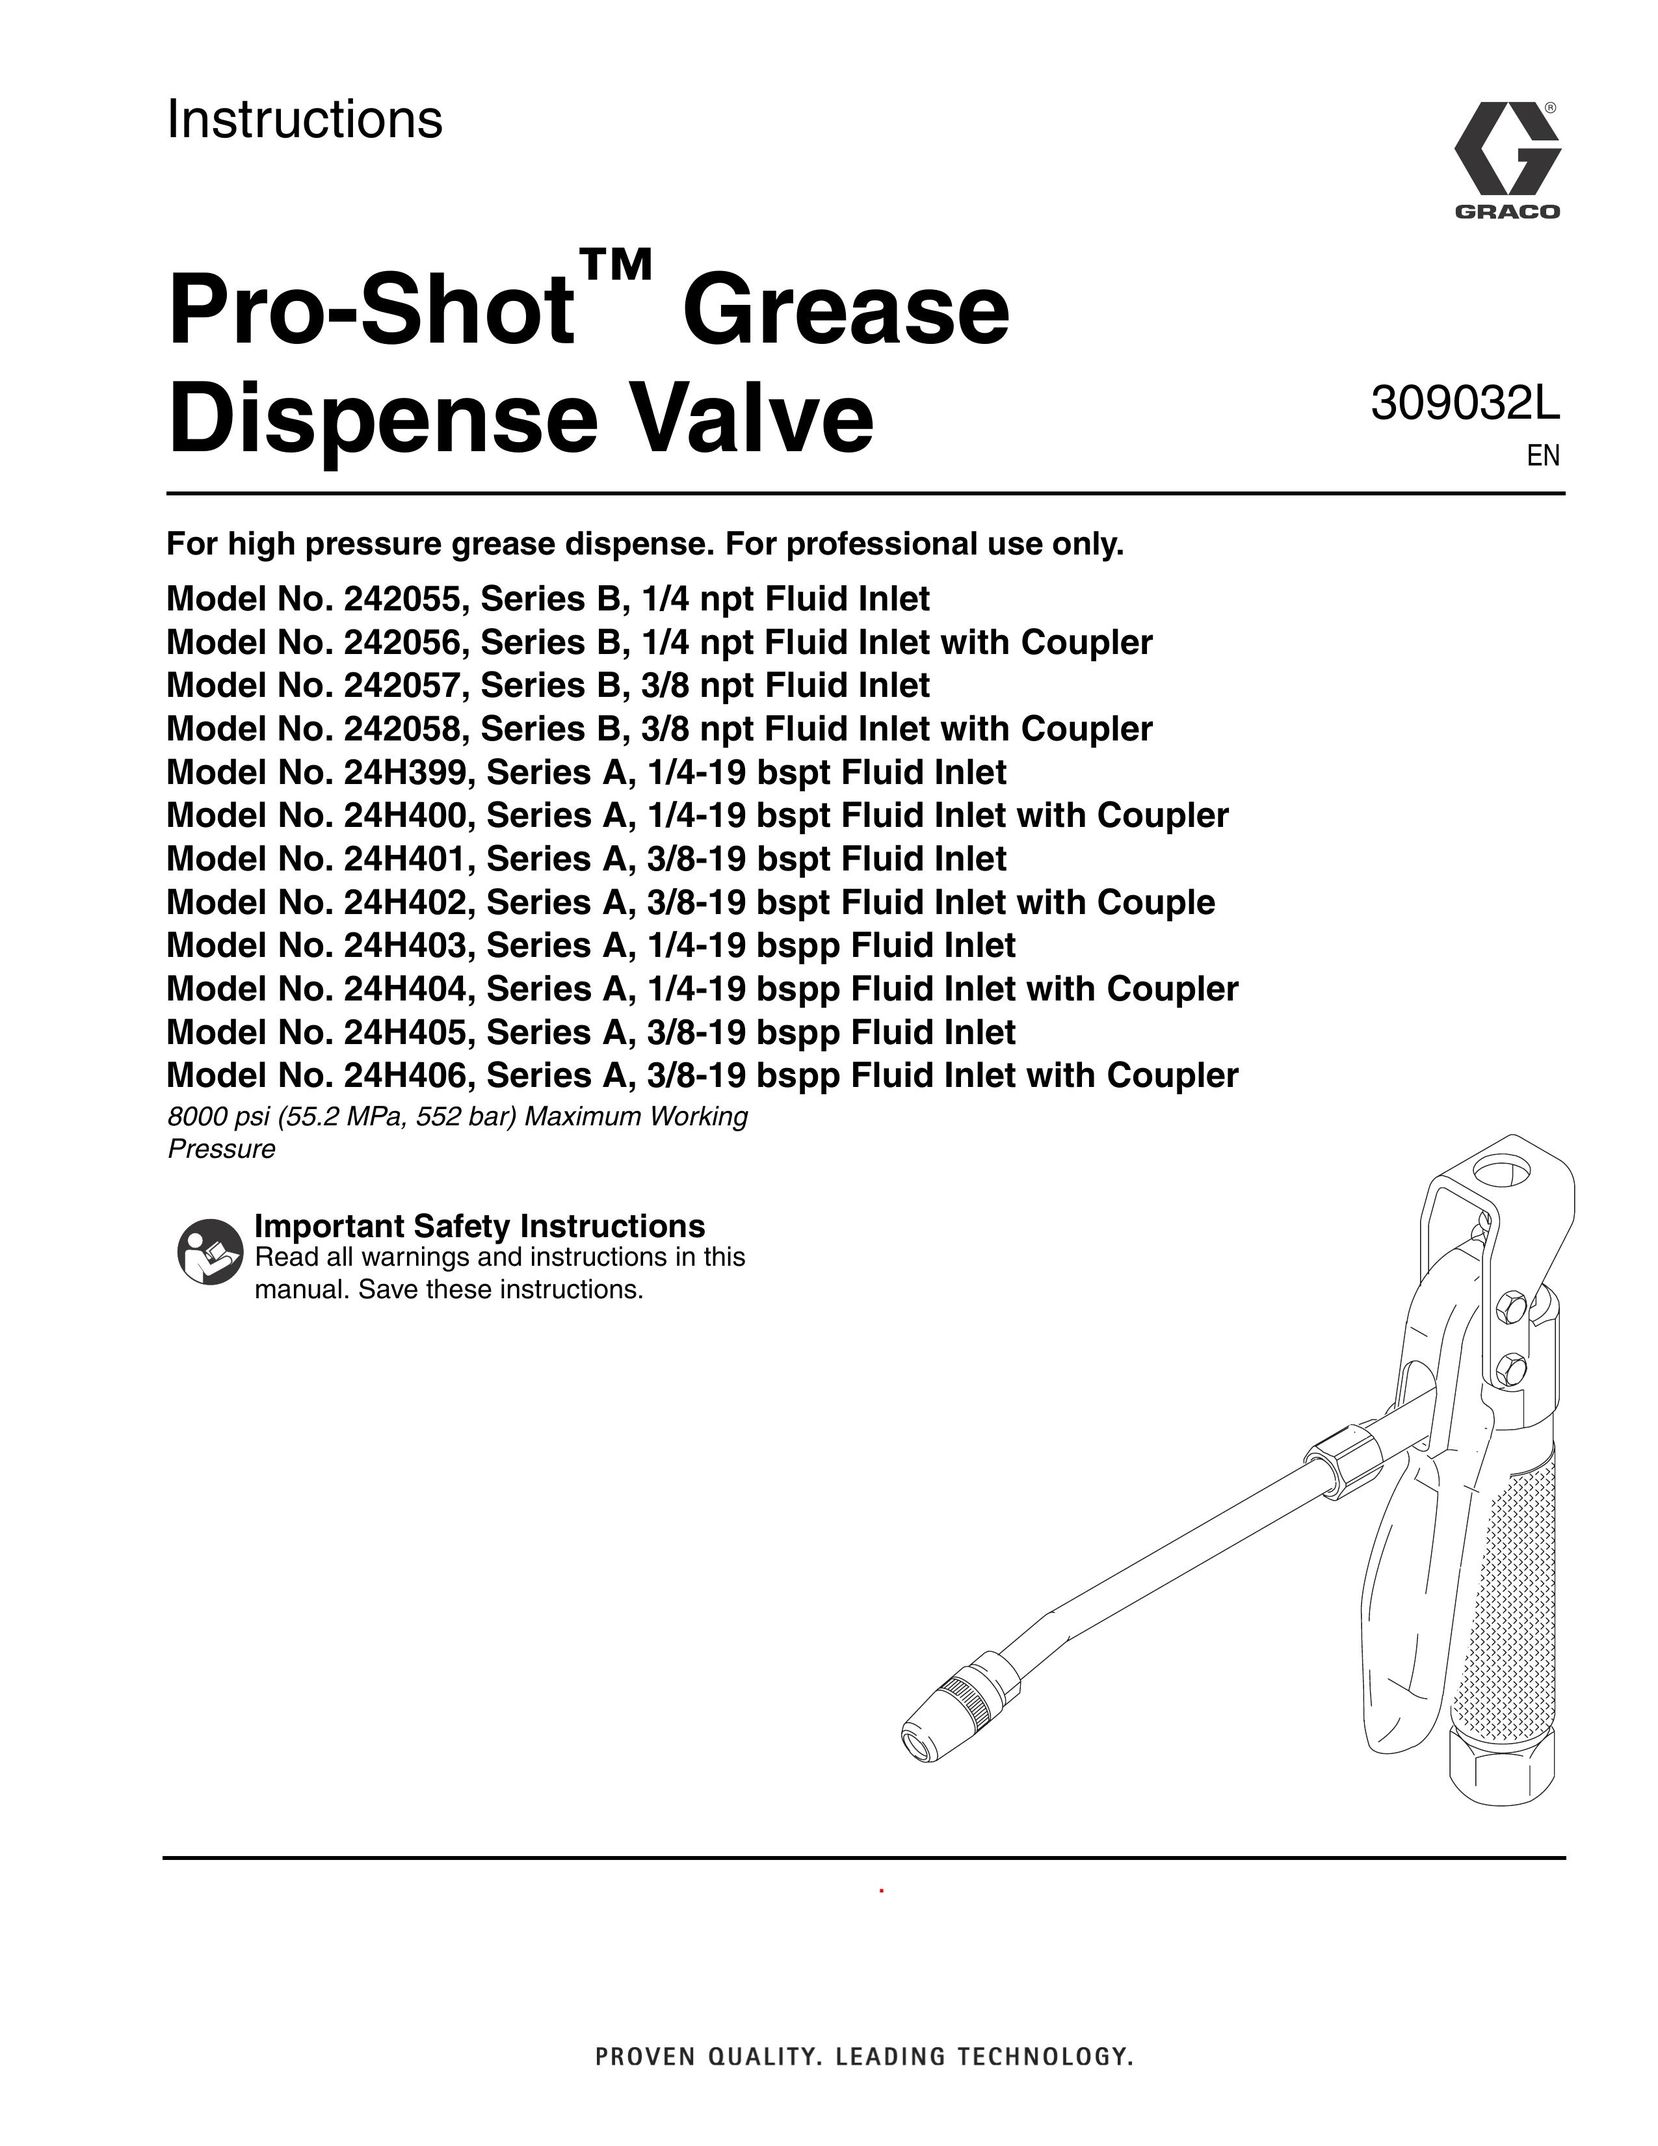 Graco 24H404 Glue Gun User Manual